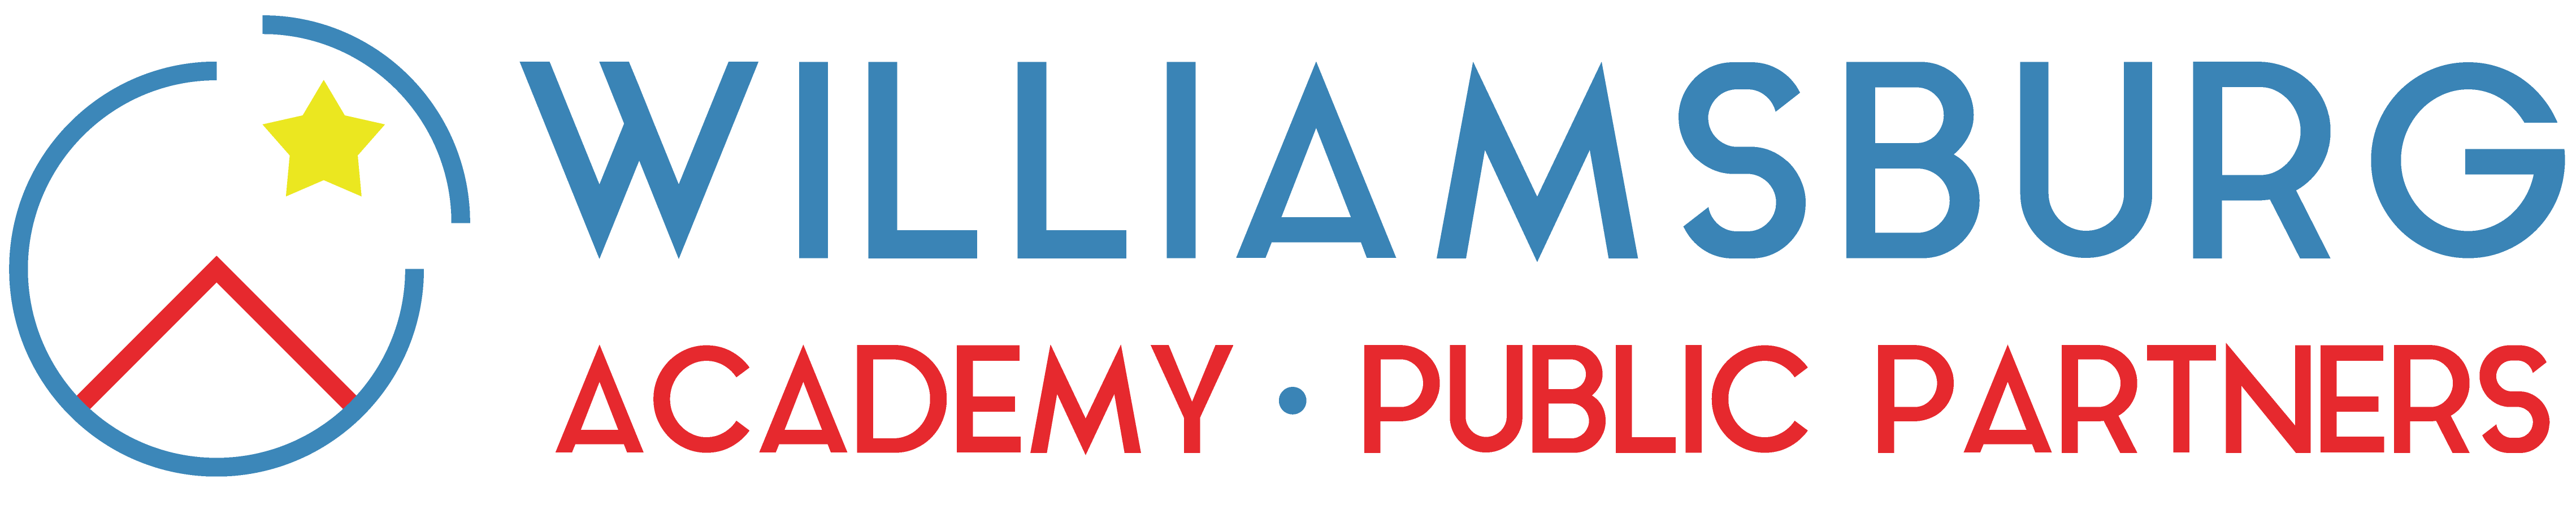 Williamsburg-Academy-Public-Partners_logo-color